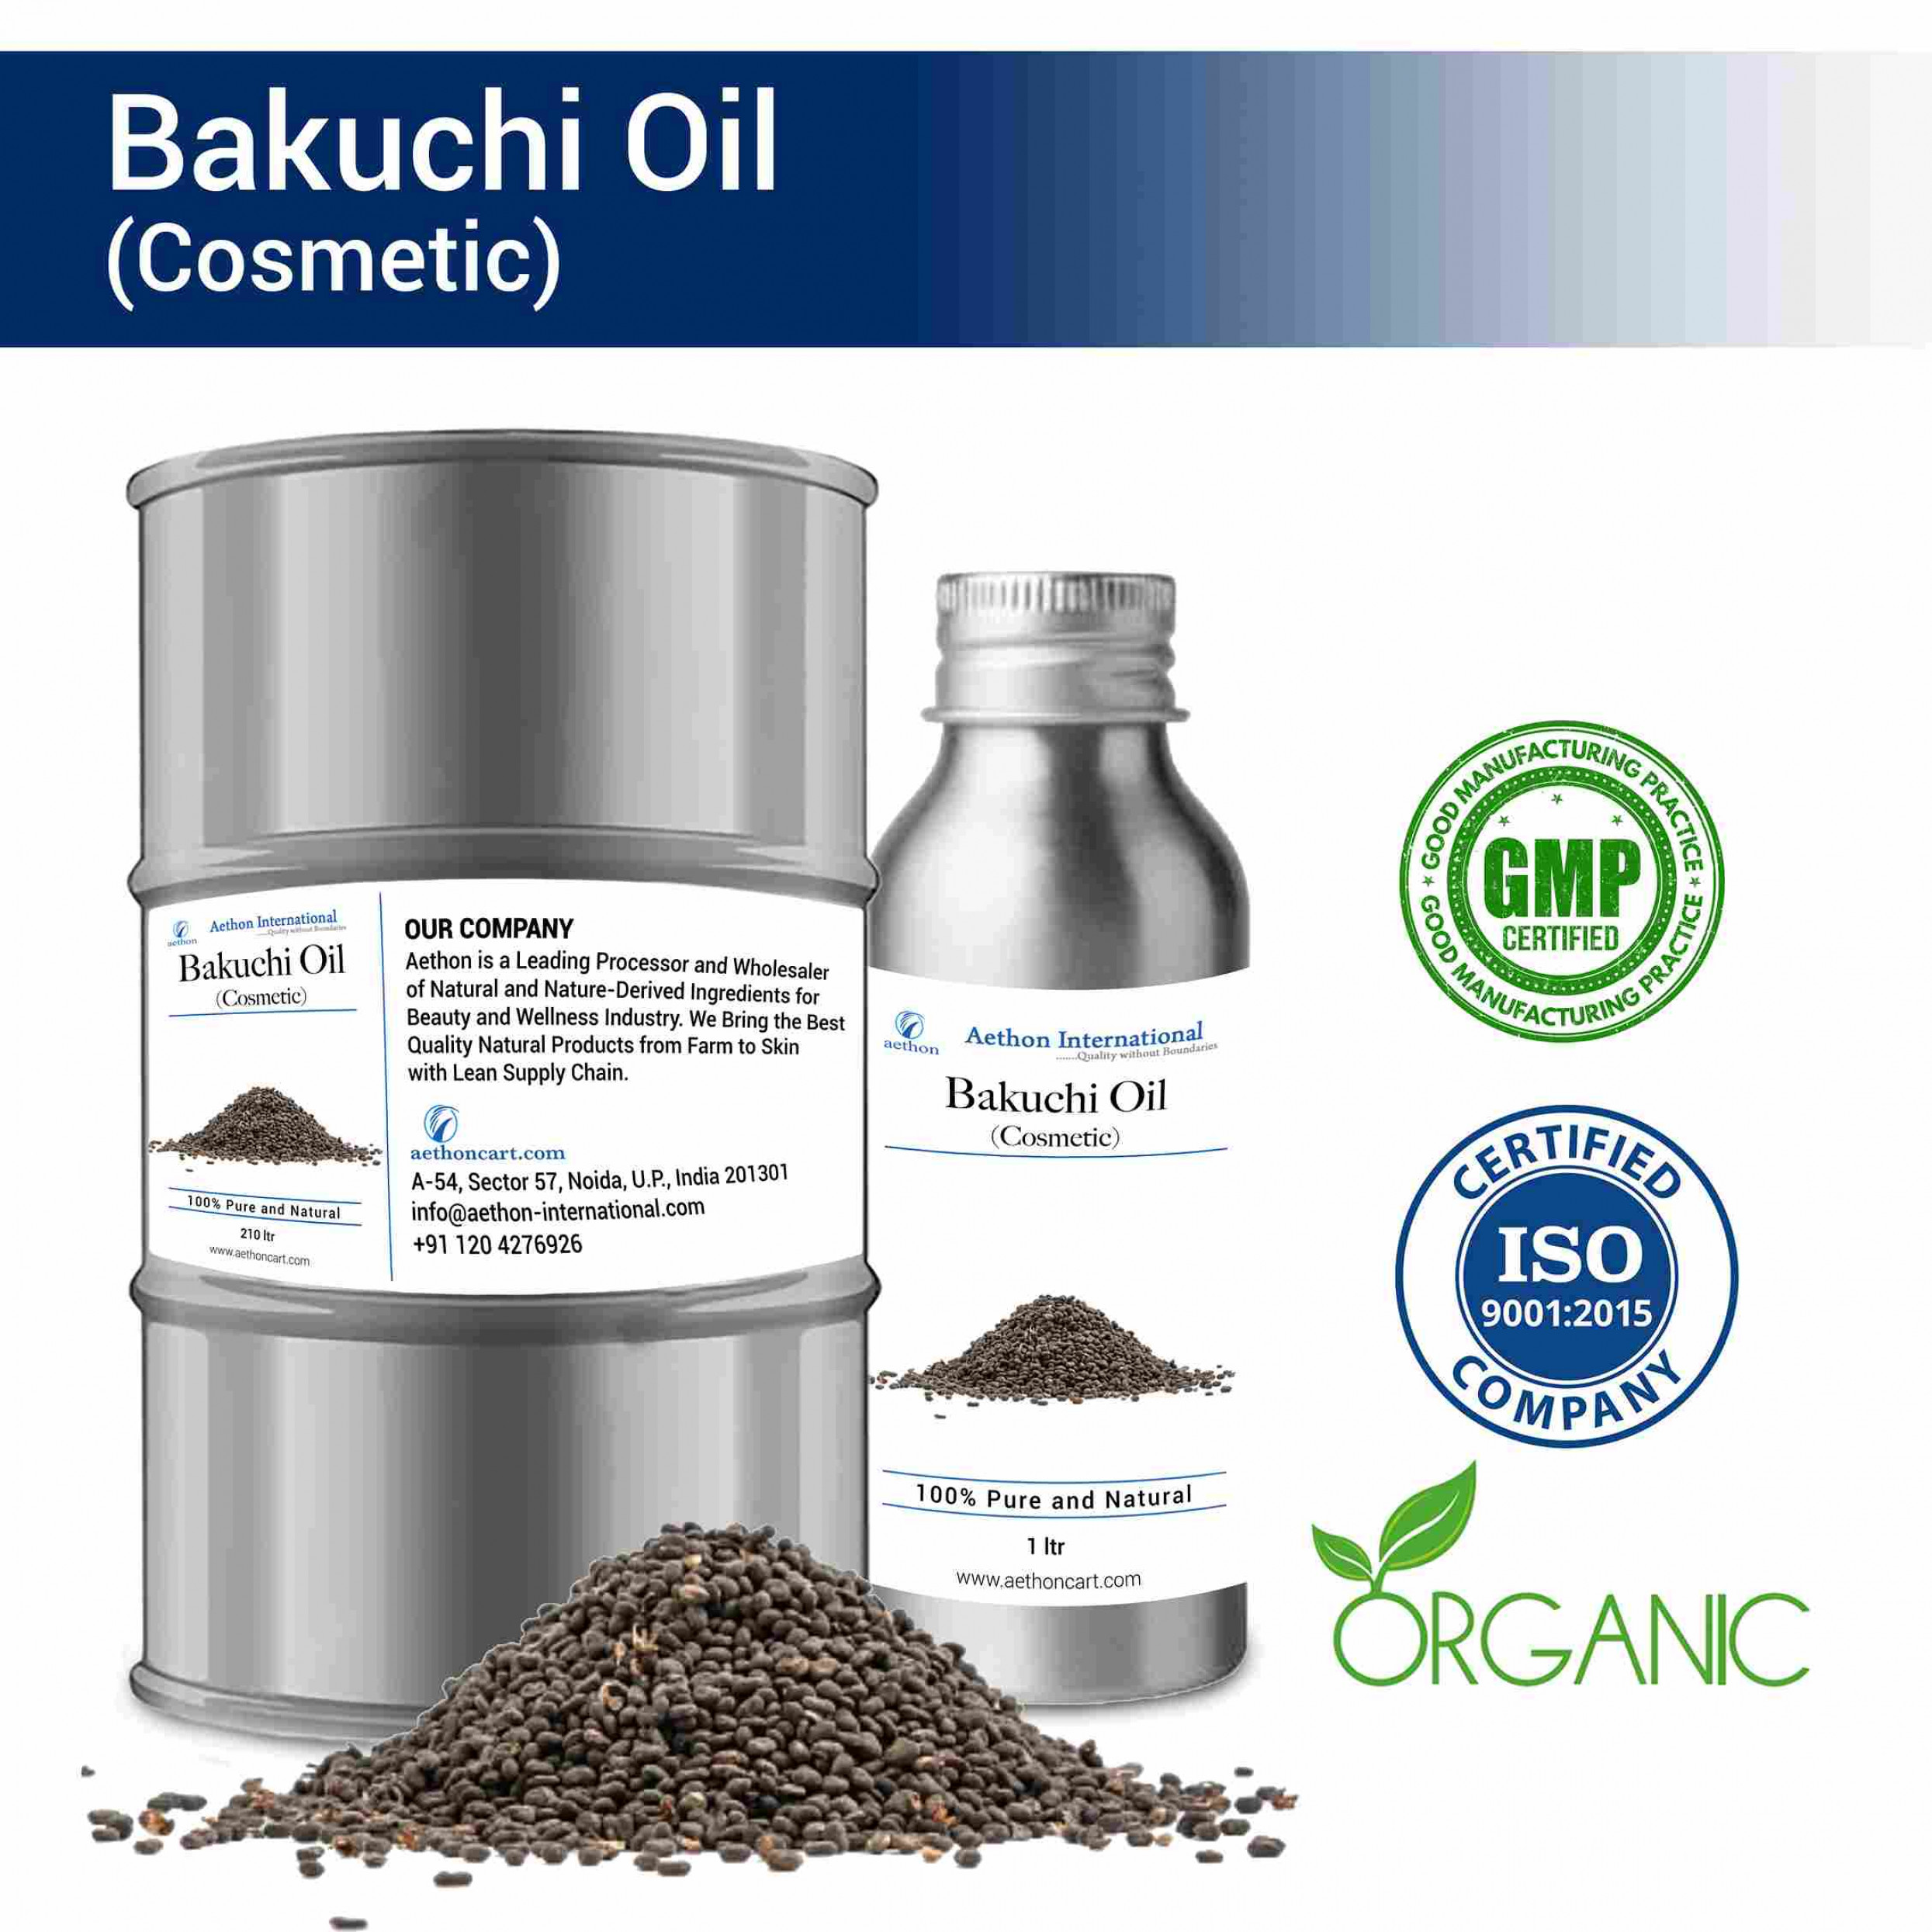 Bakuchi Oil (Cosmetic)